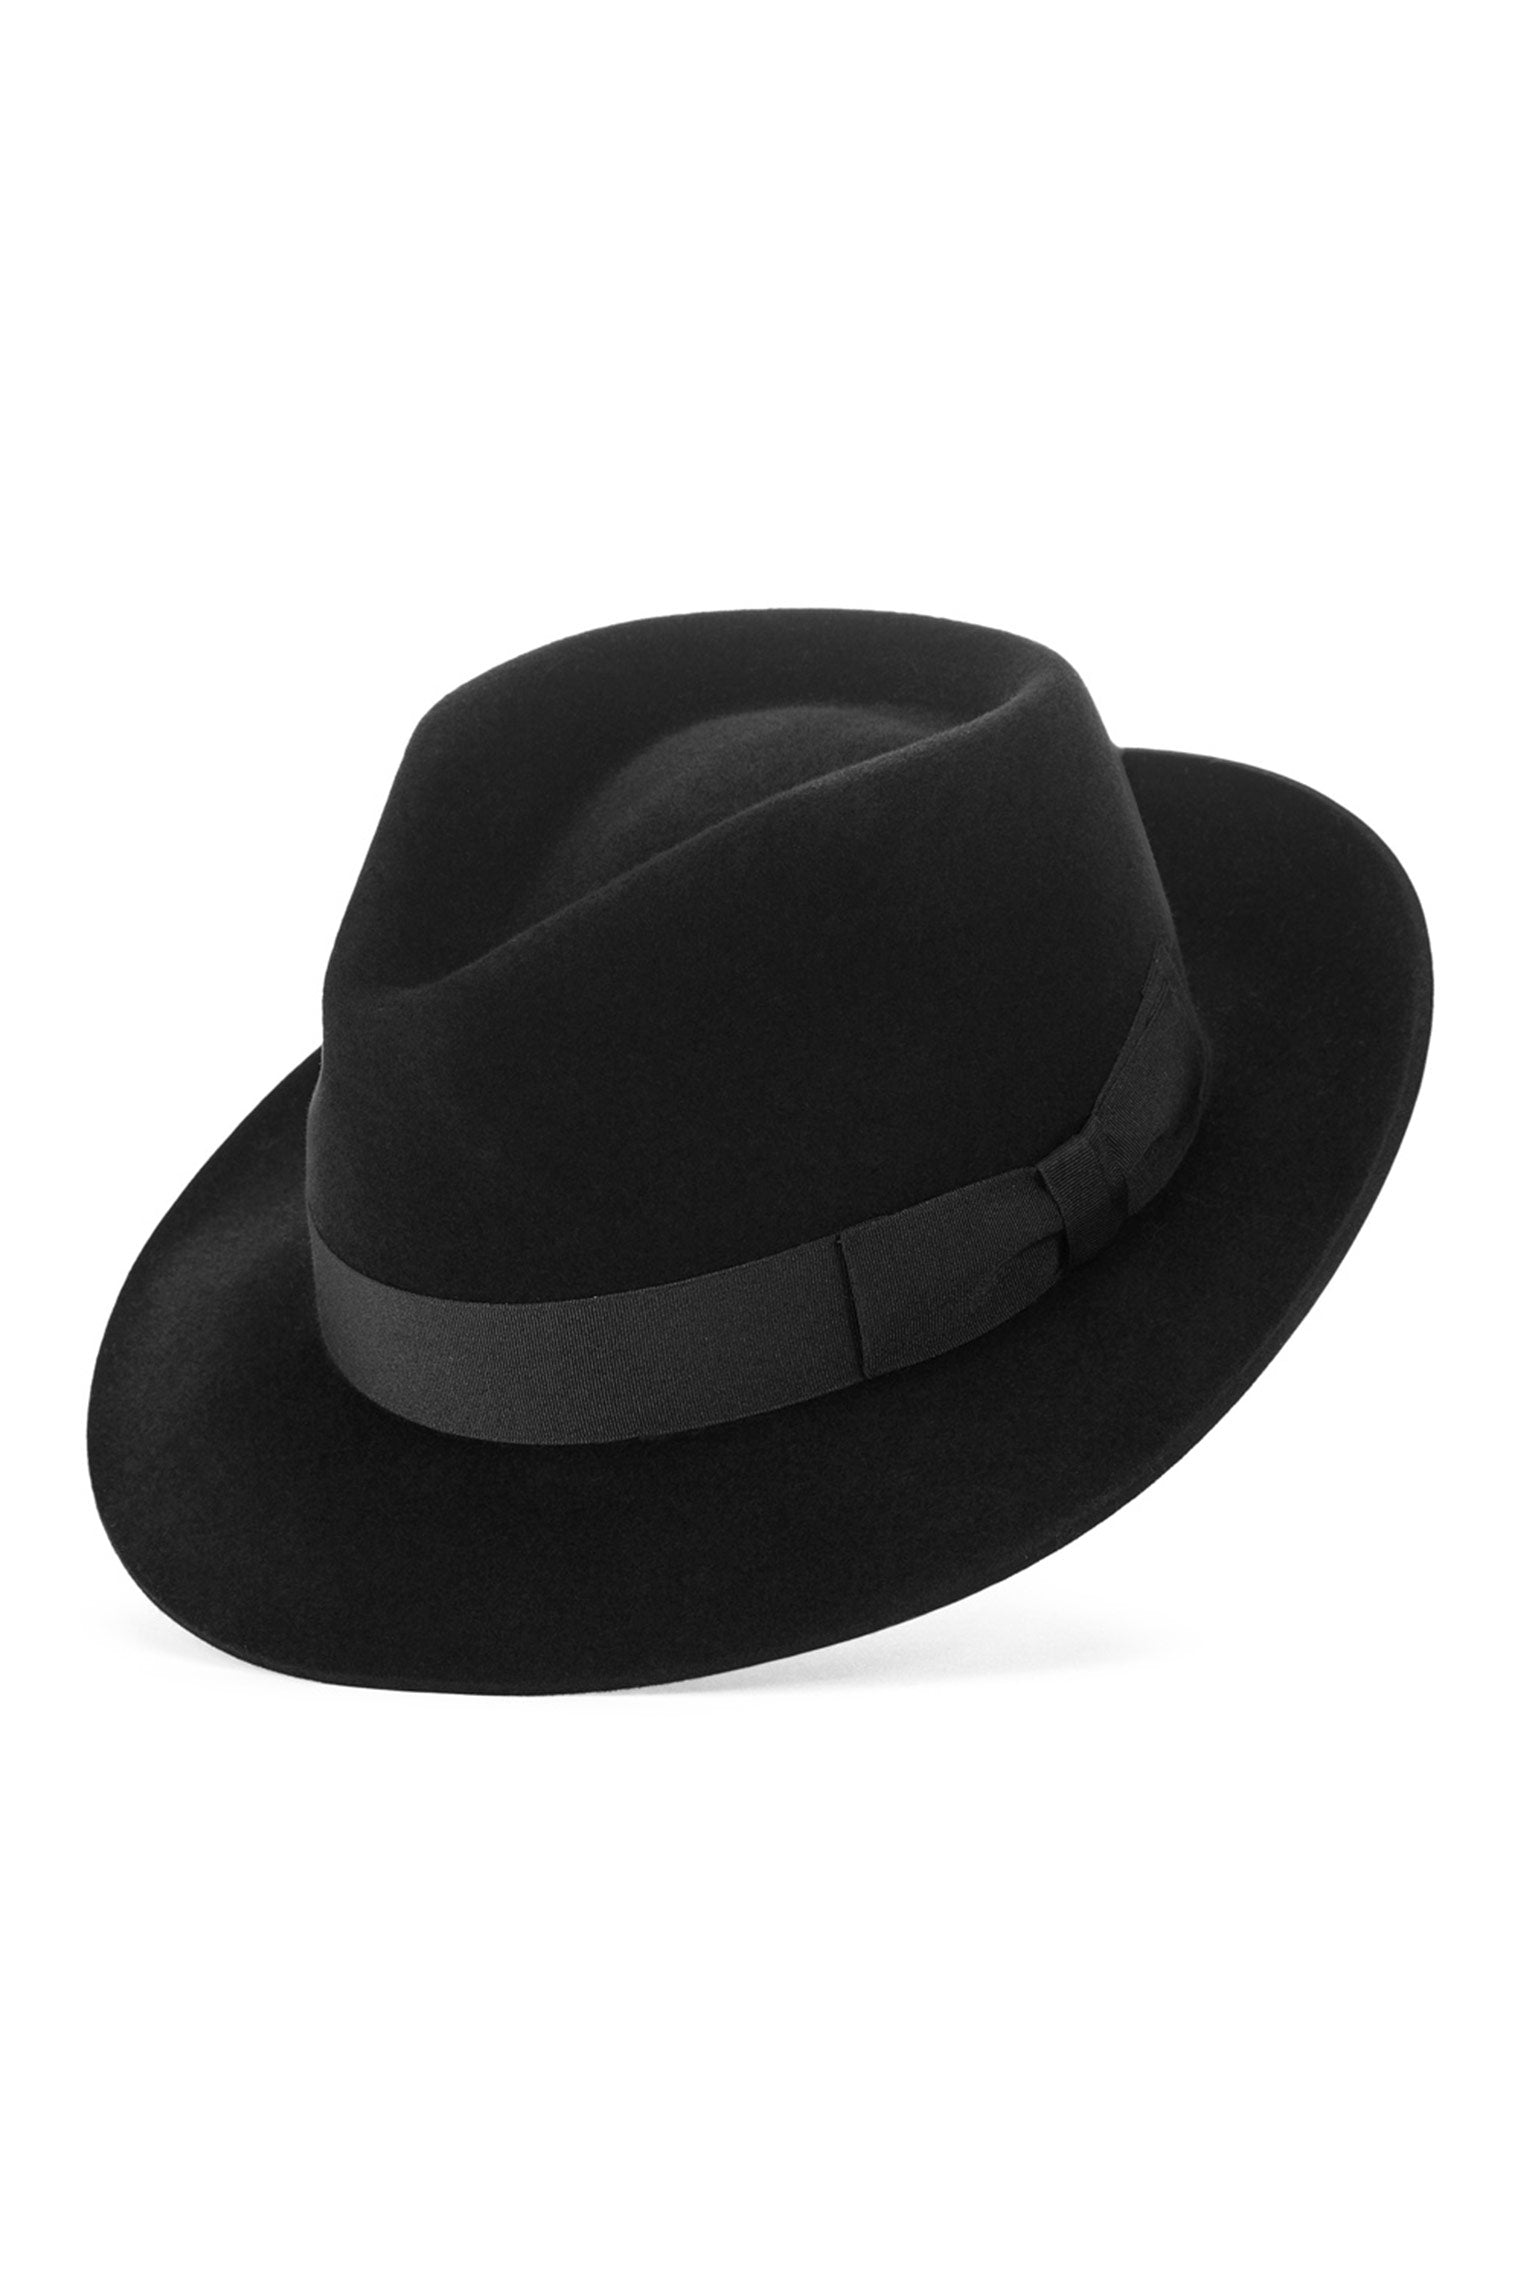 Regent Fedora - Men's Hats - Lock & Co. Hatters London UK